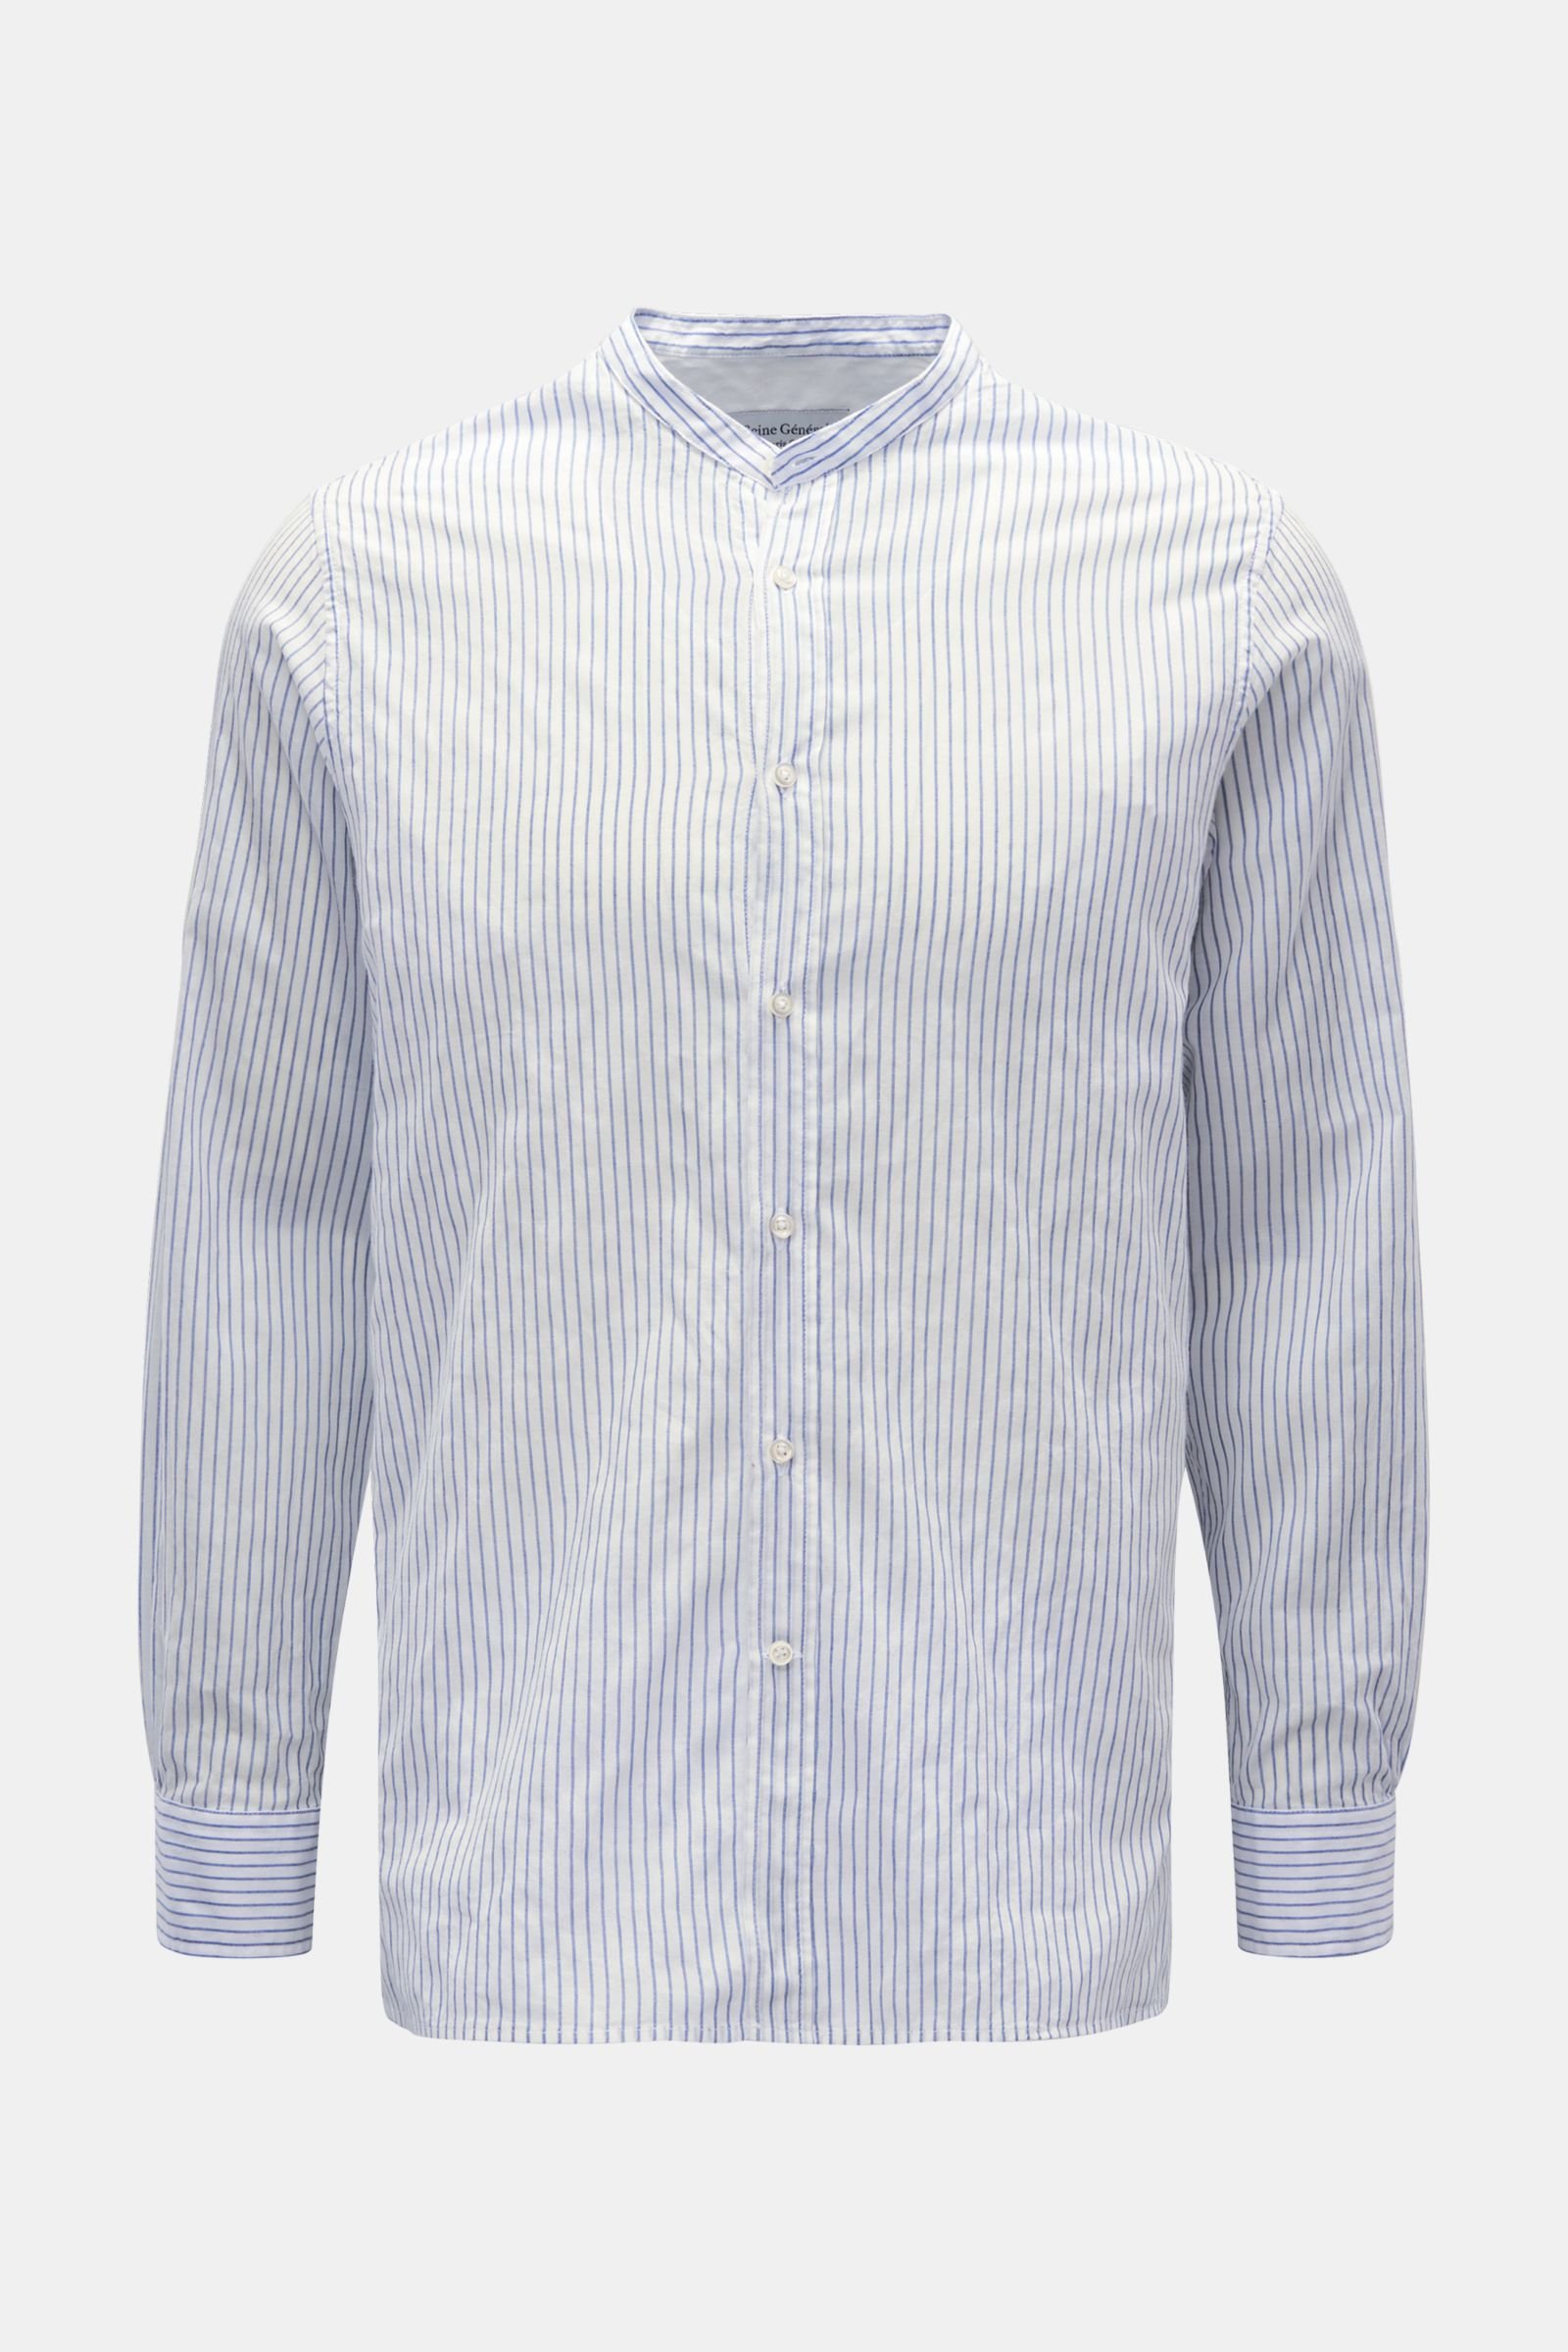 Casual shirt 'Gaston' grandad collar white/navy striped